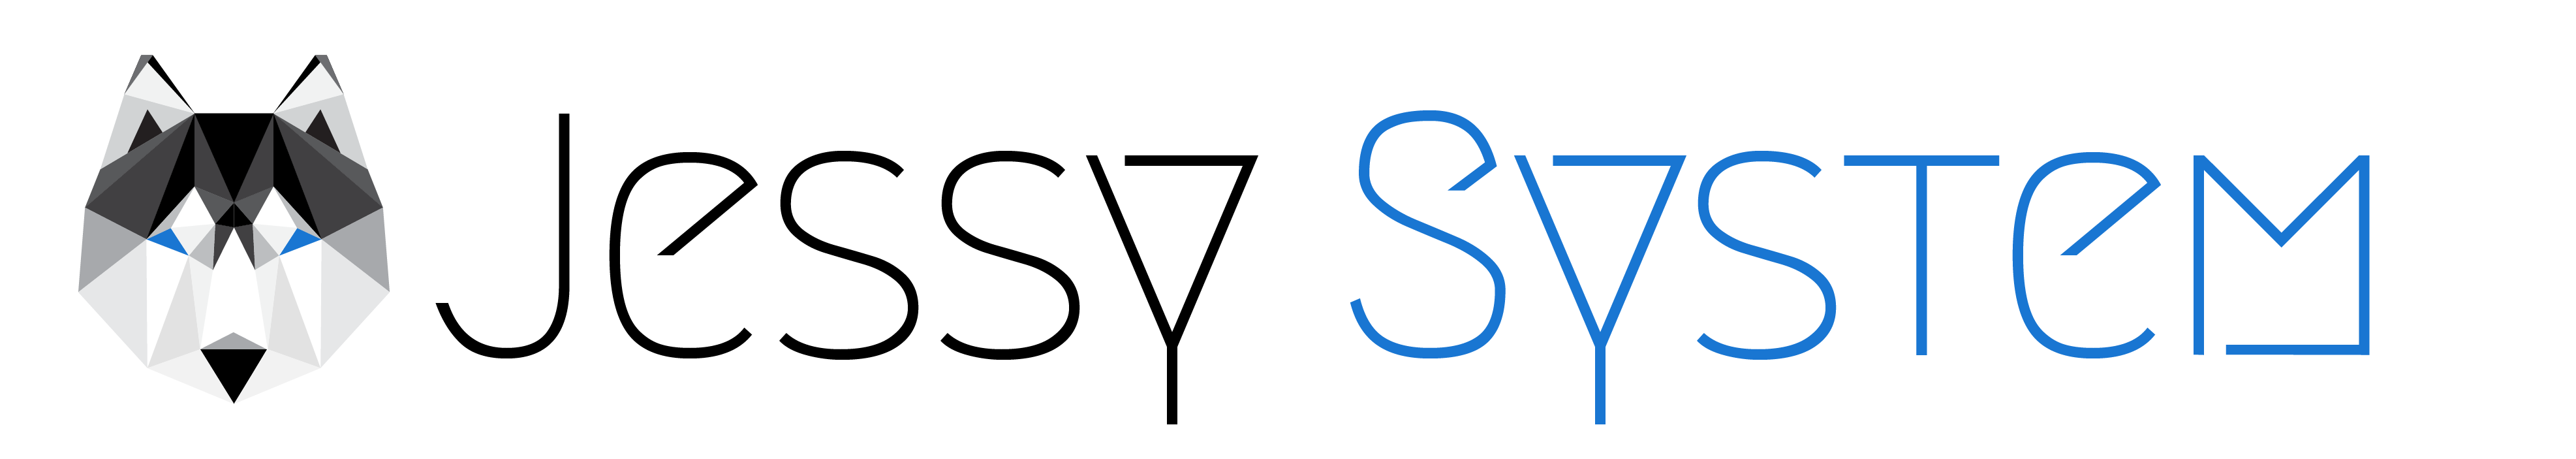 Logo JESSYSYSTEM SAS